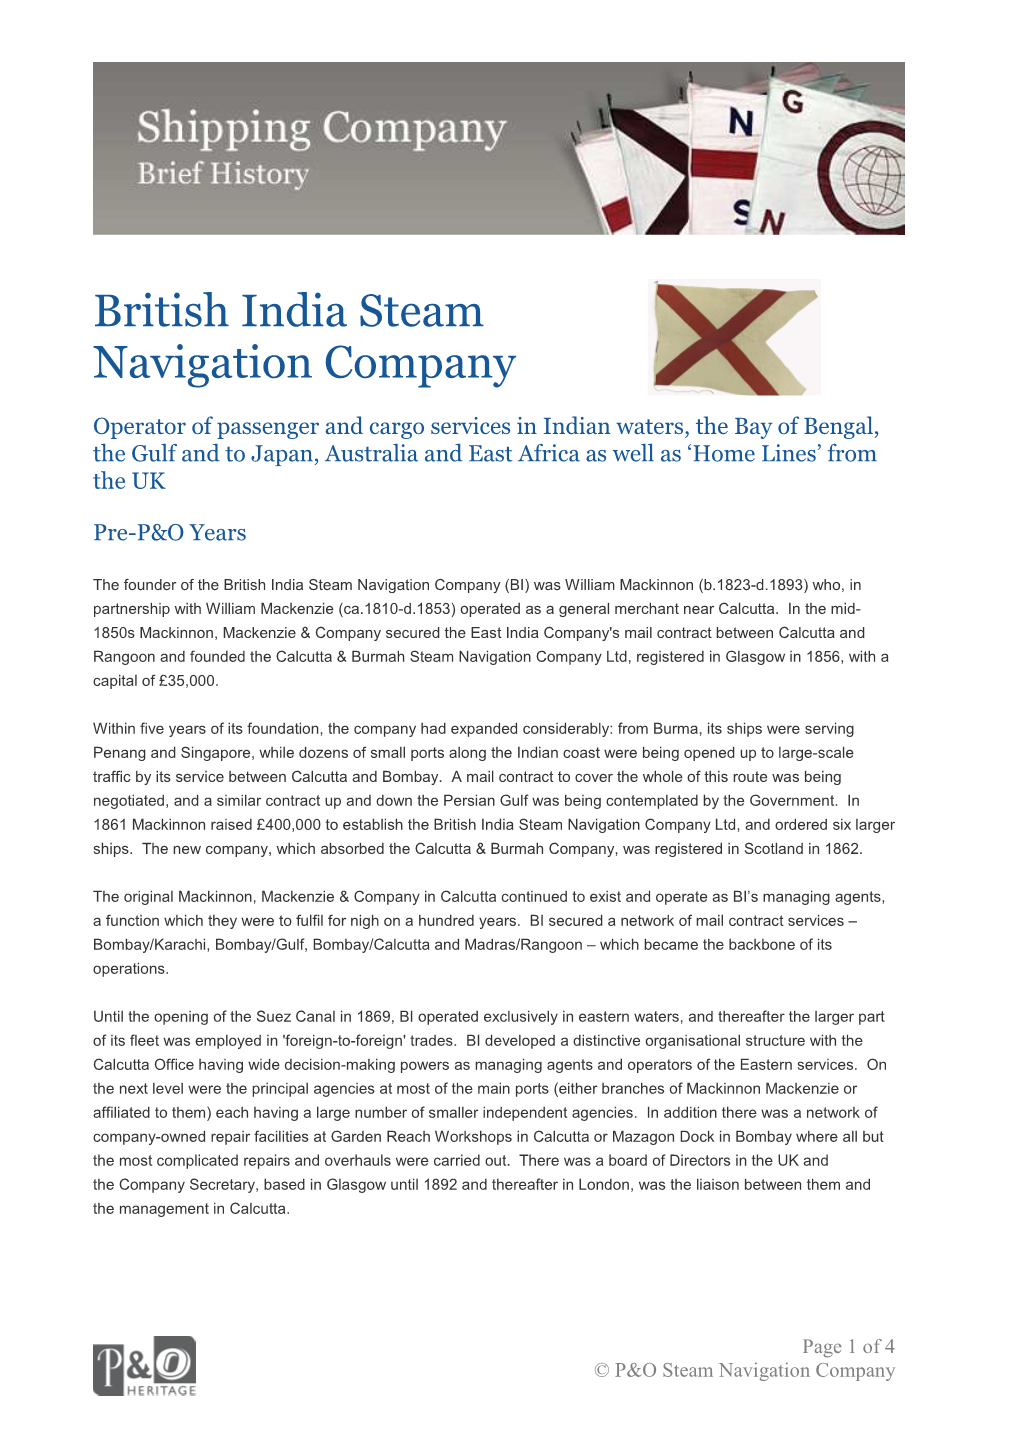 British India Steam Navigation Company